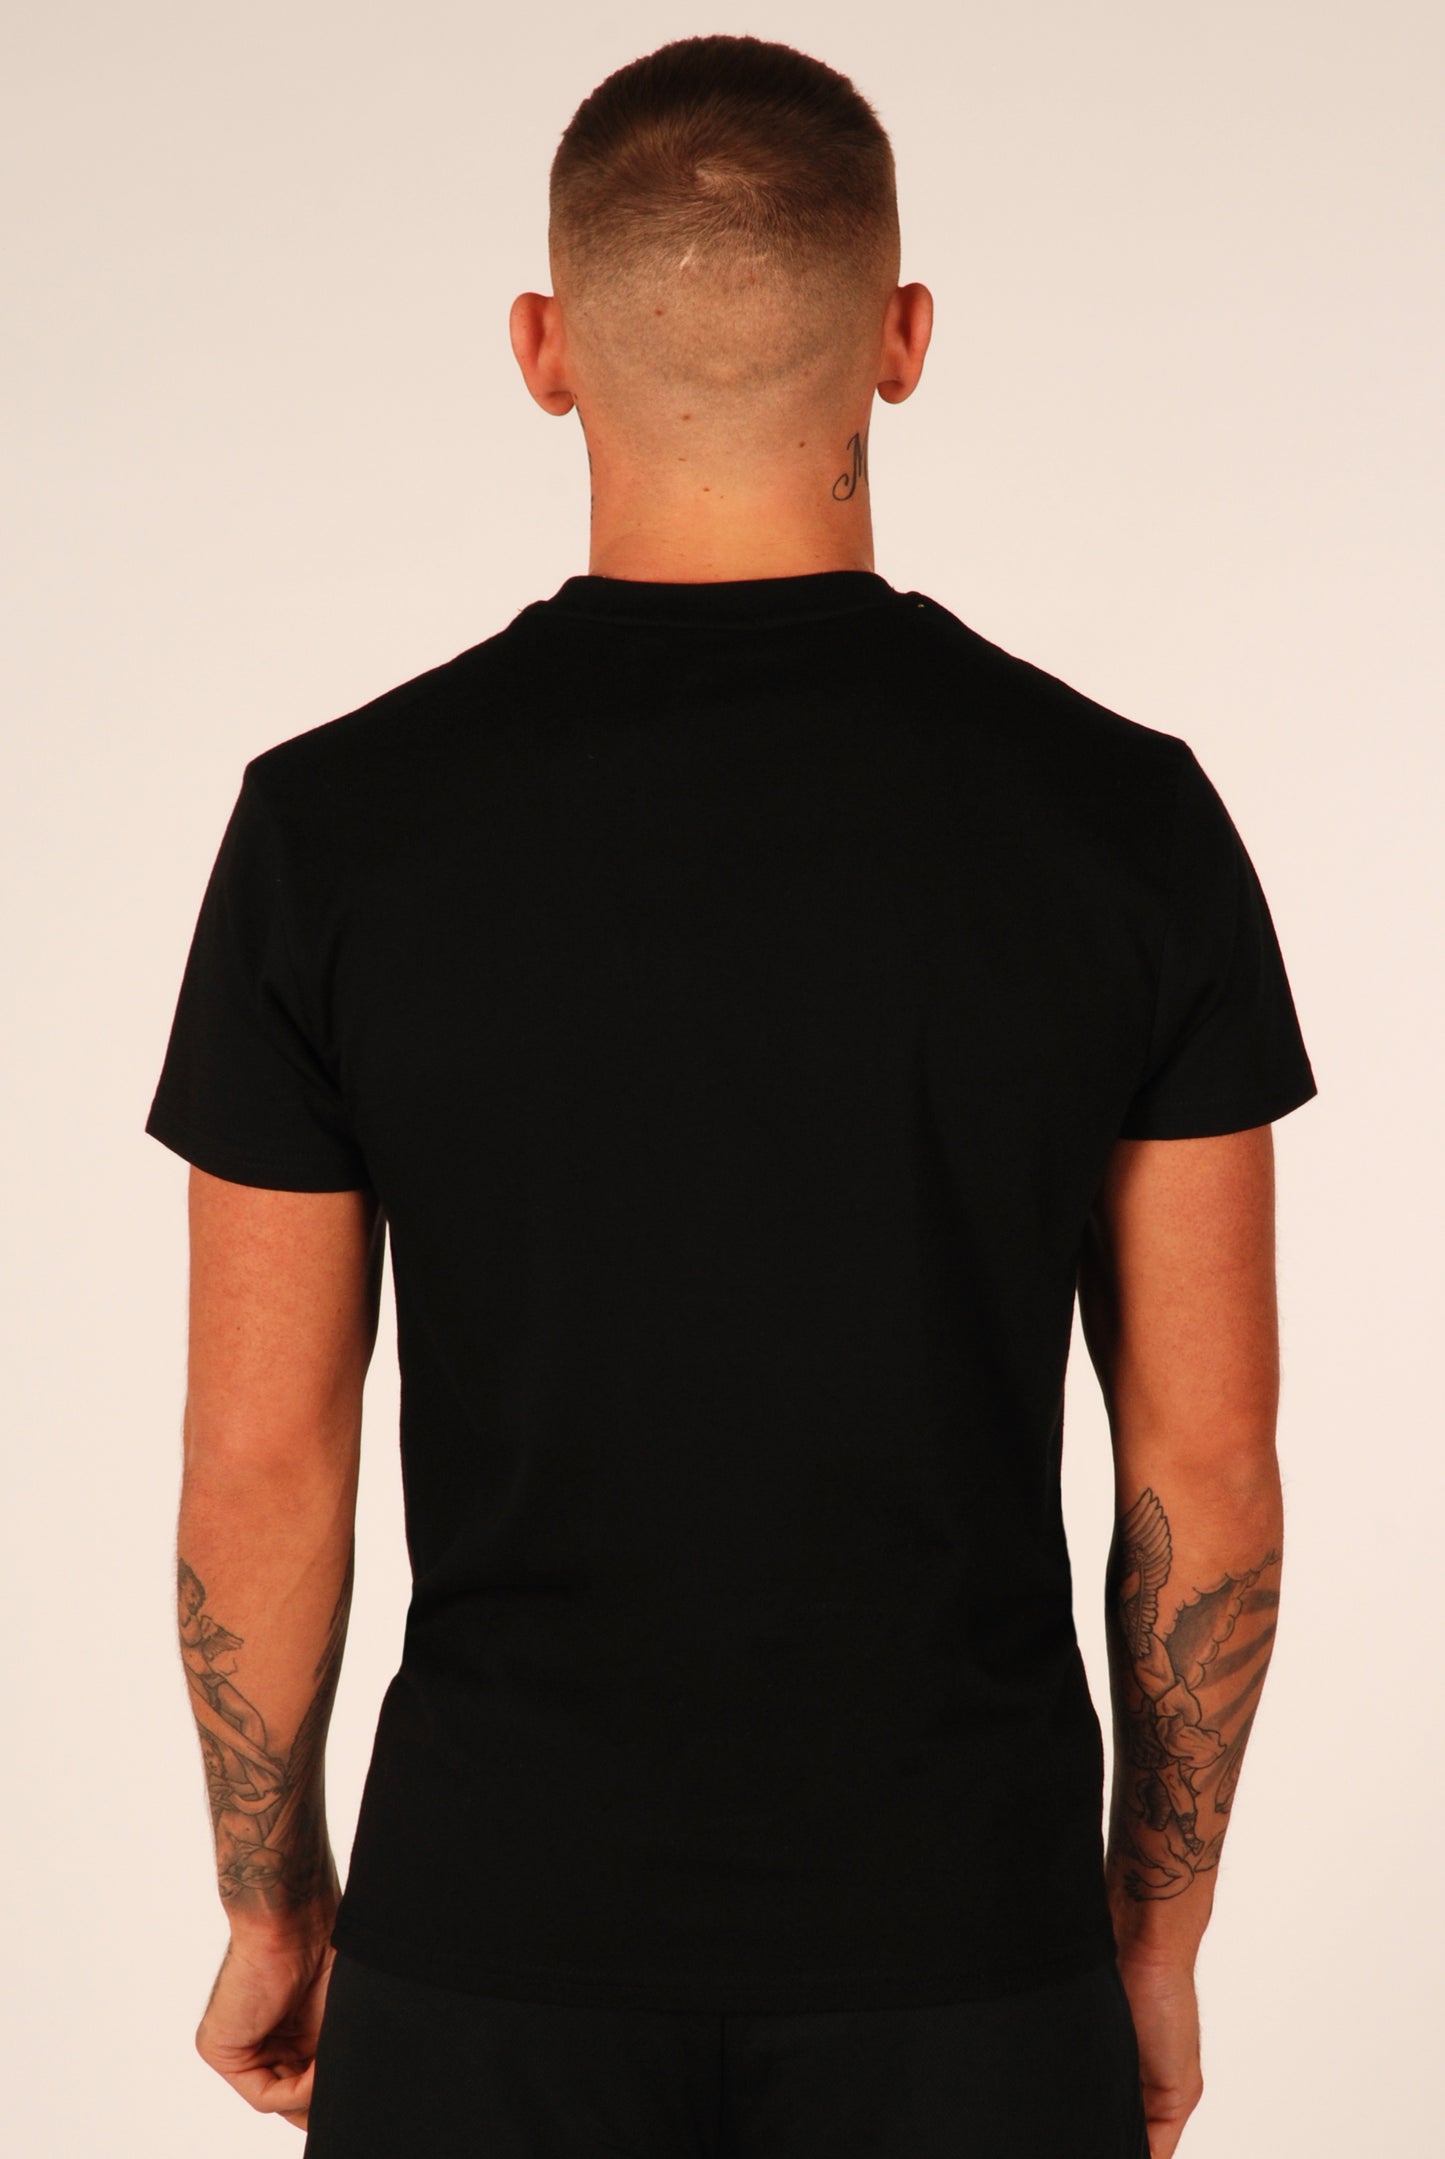 KRONK Detroit Regular Fit T Shirt Black with Charcoal logo